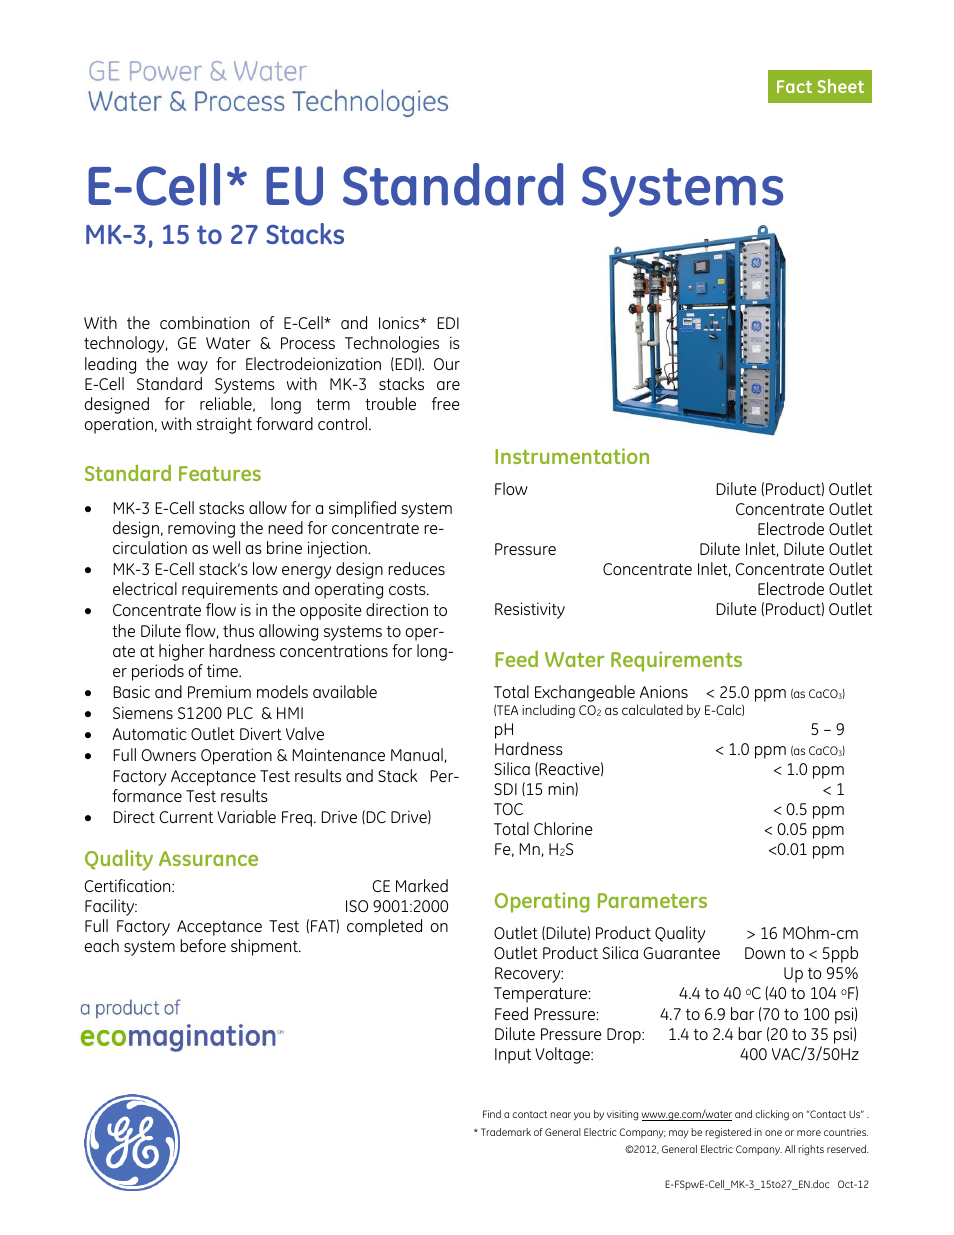 Electrodeionization (EDI) - E-Cell EU Standard Systems MK-3, 15 to 27 Stacks